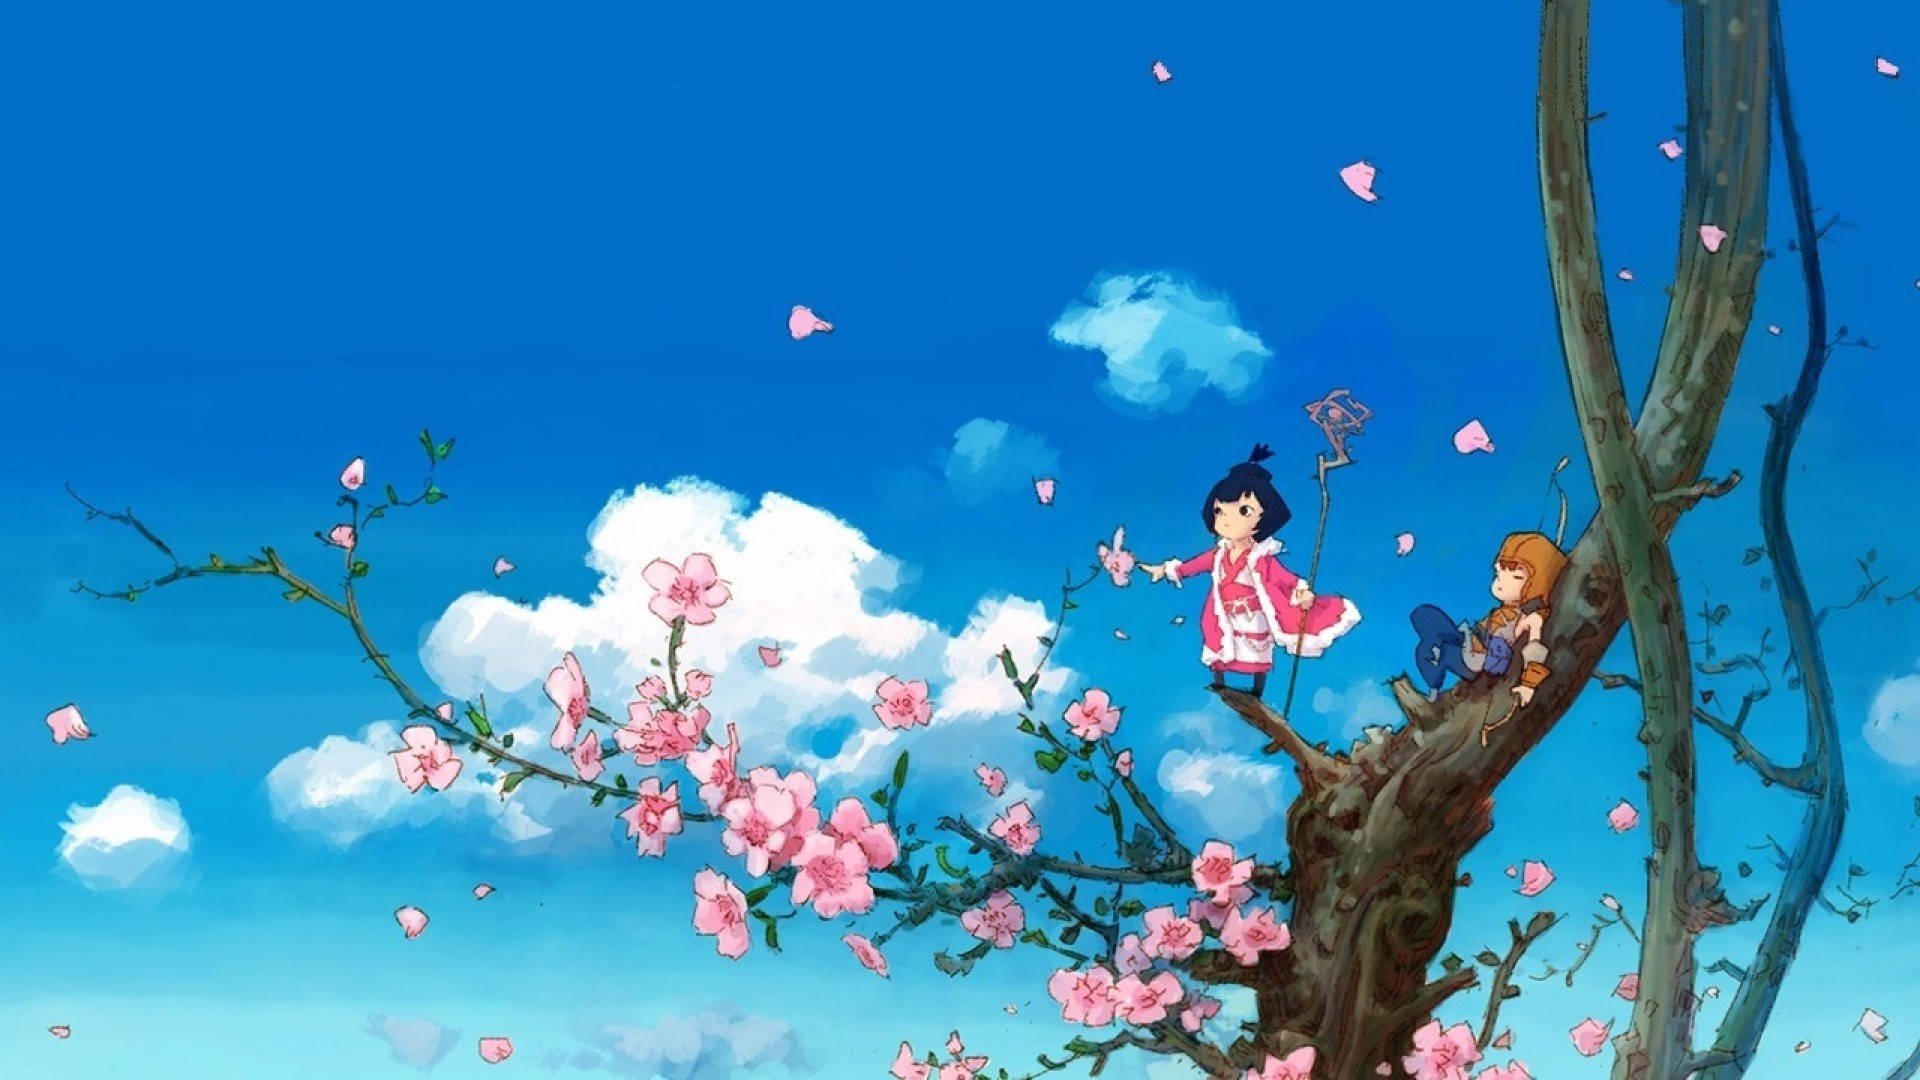 Wallpaper Minimalism Anime Cloud Atmosphere Orange Background   Download Free Image